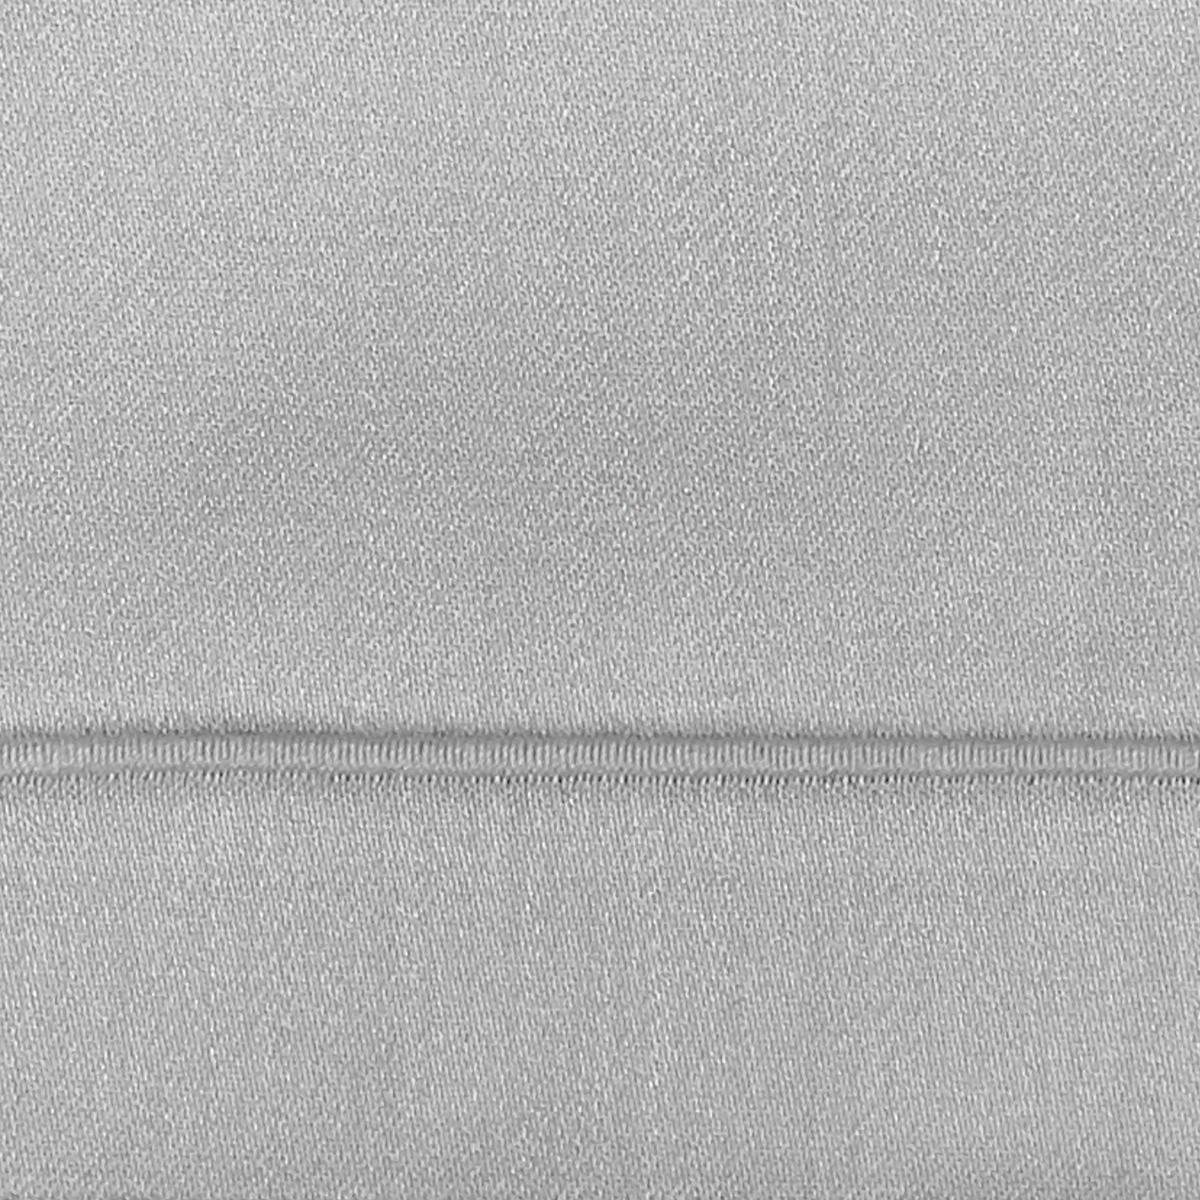 Matouk Talita Satin Stitch Bedding Swatch Silver Fine Linens